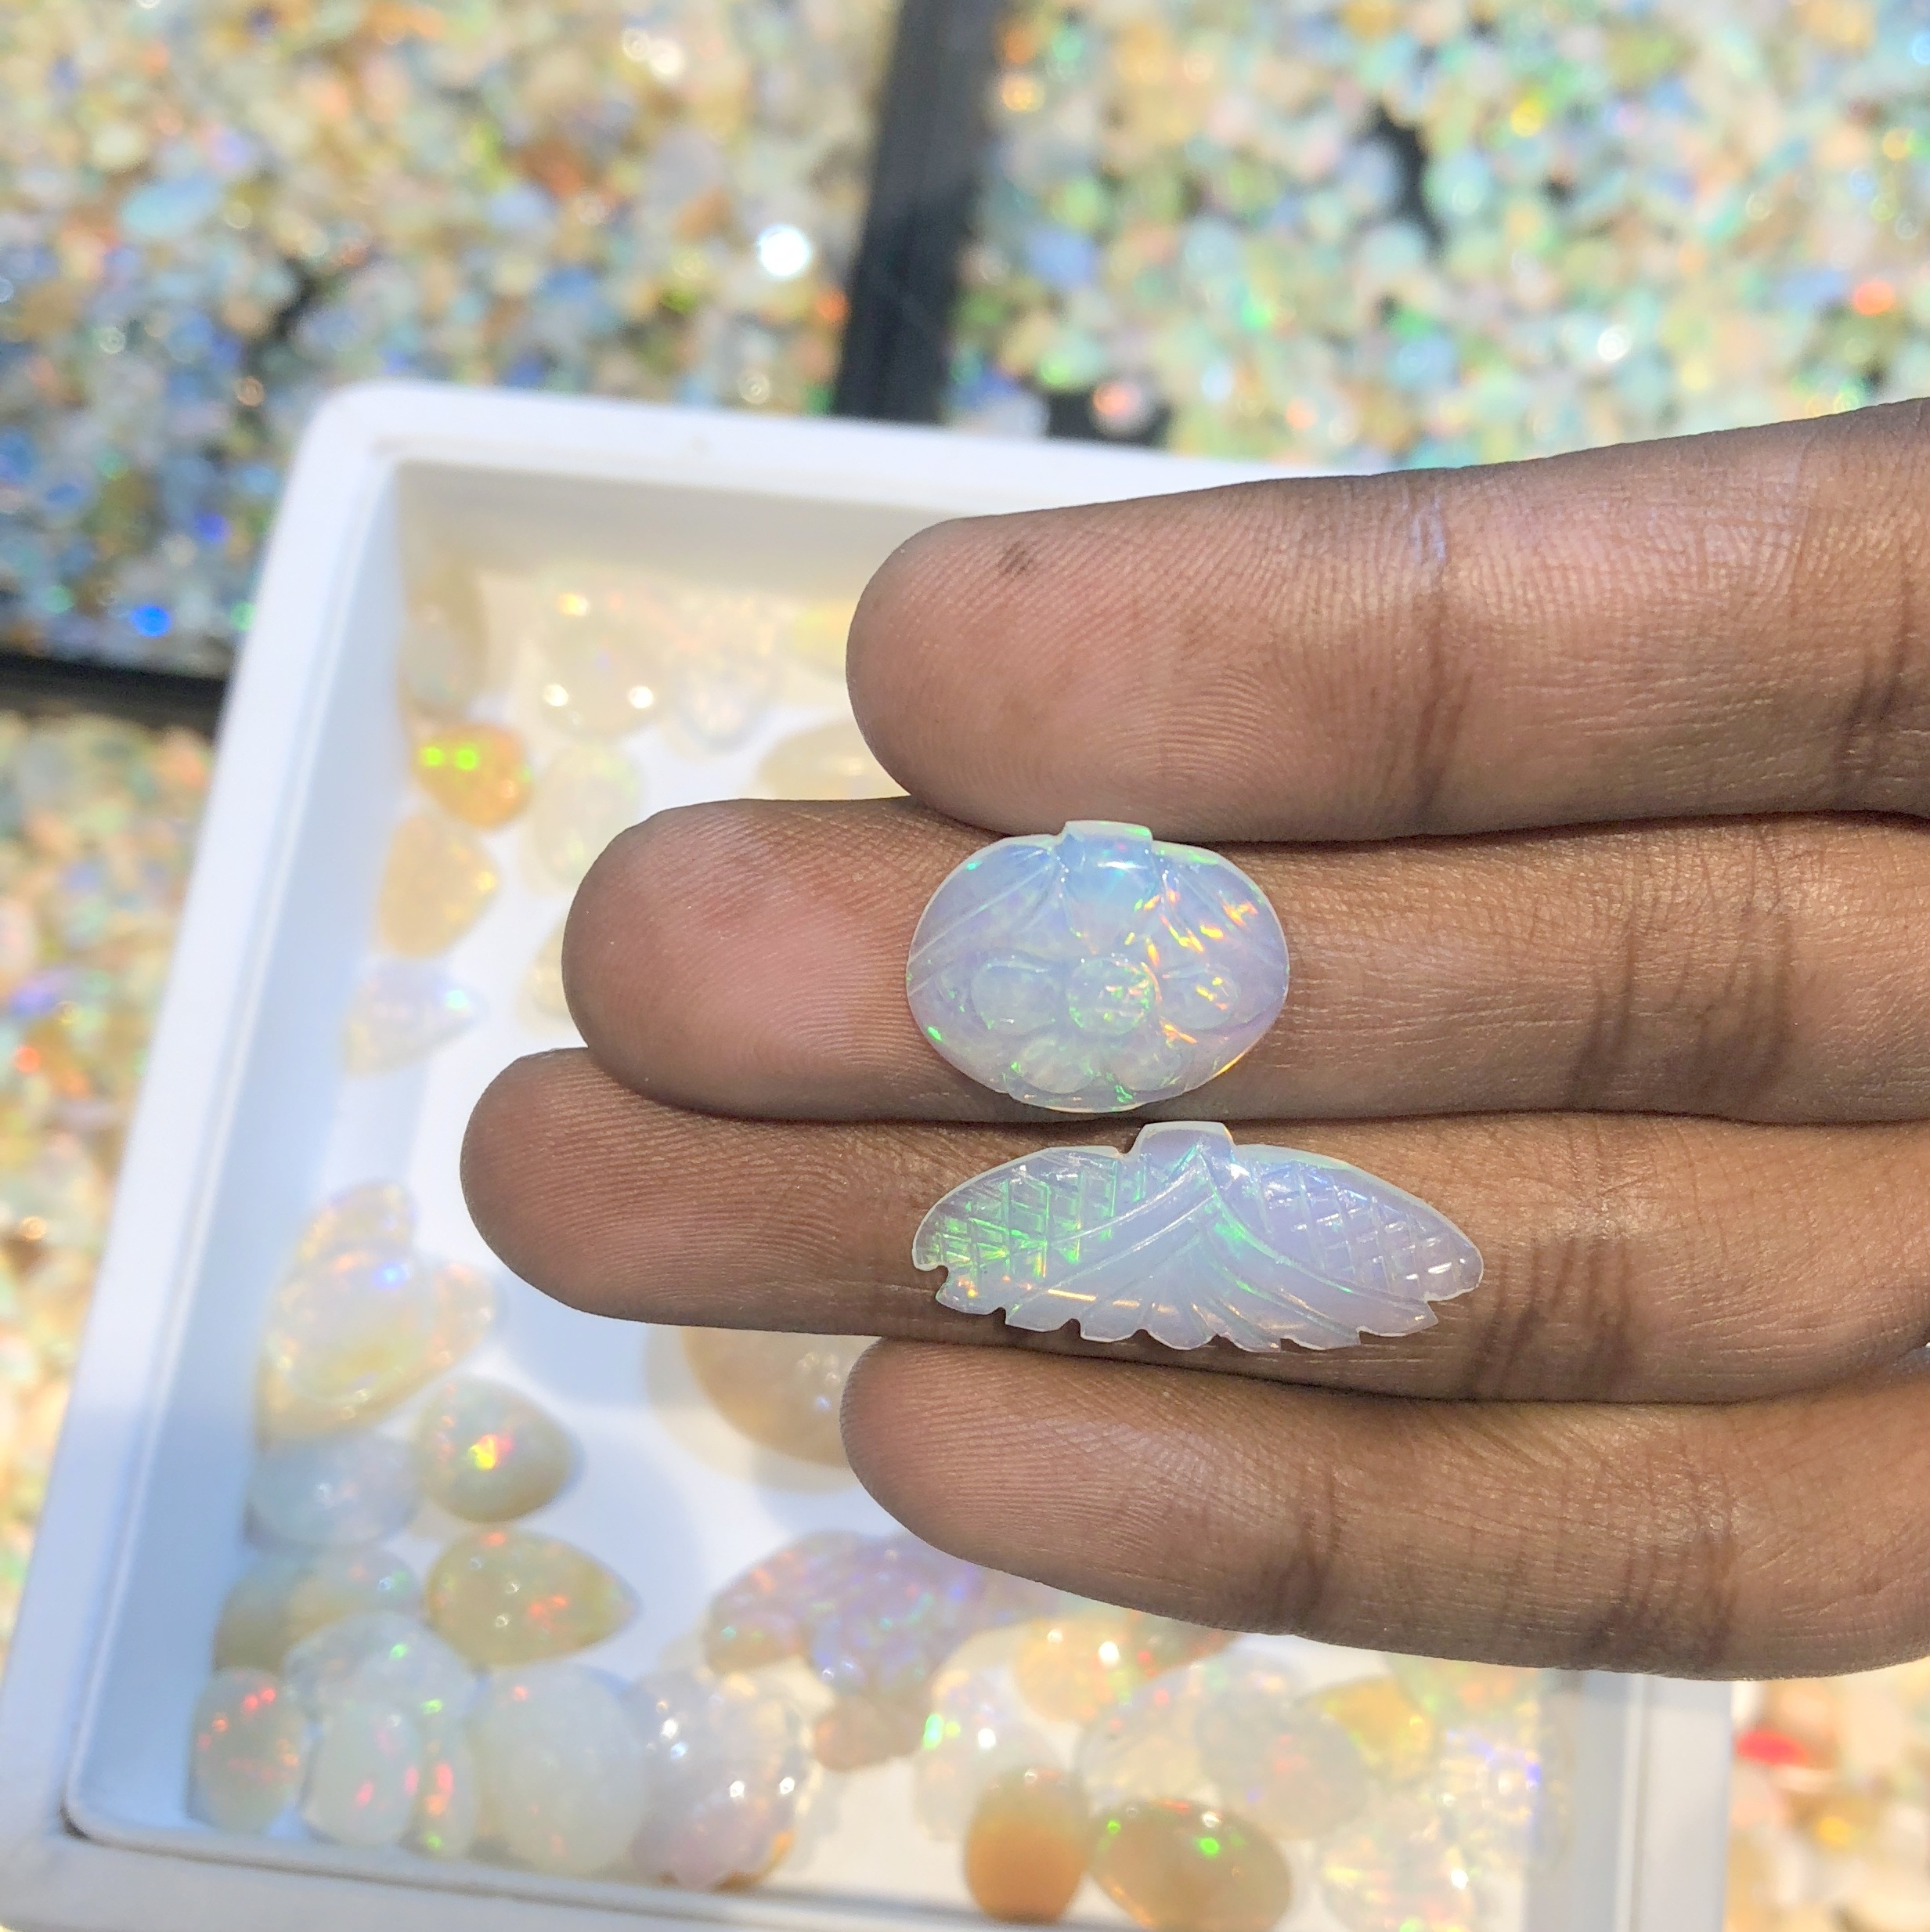 Ethiopian Opal - Every GEM has its Story! BulkGemstones.com